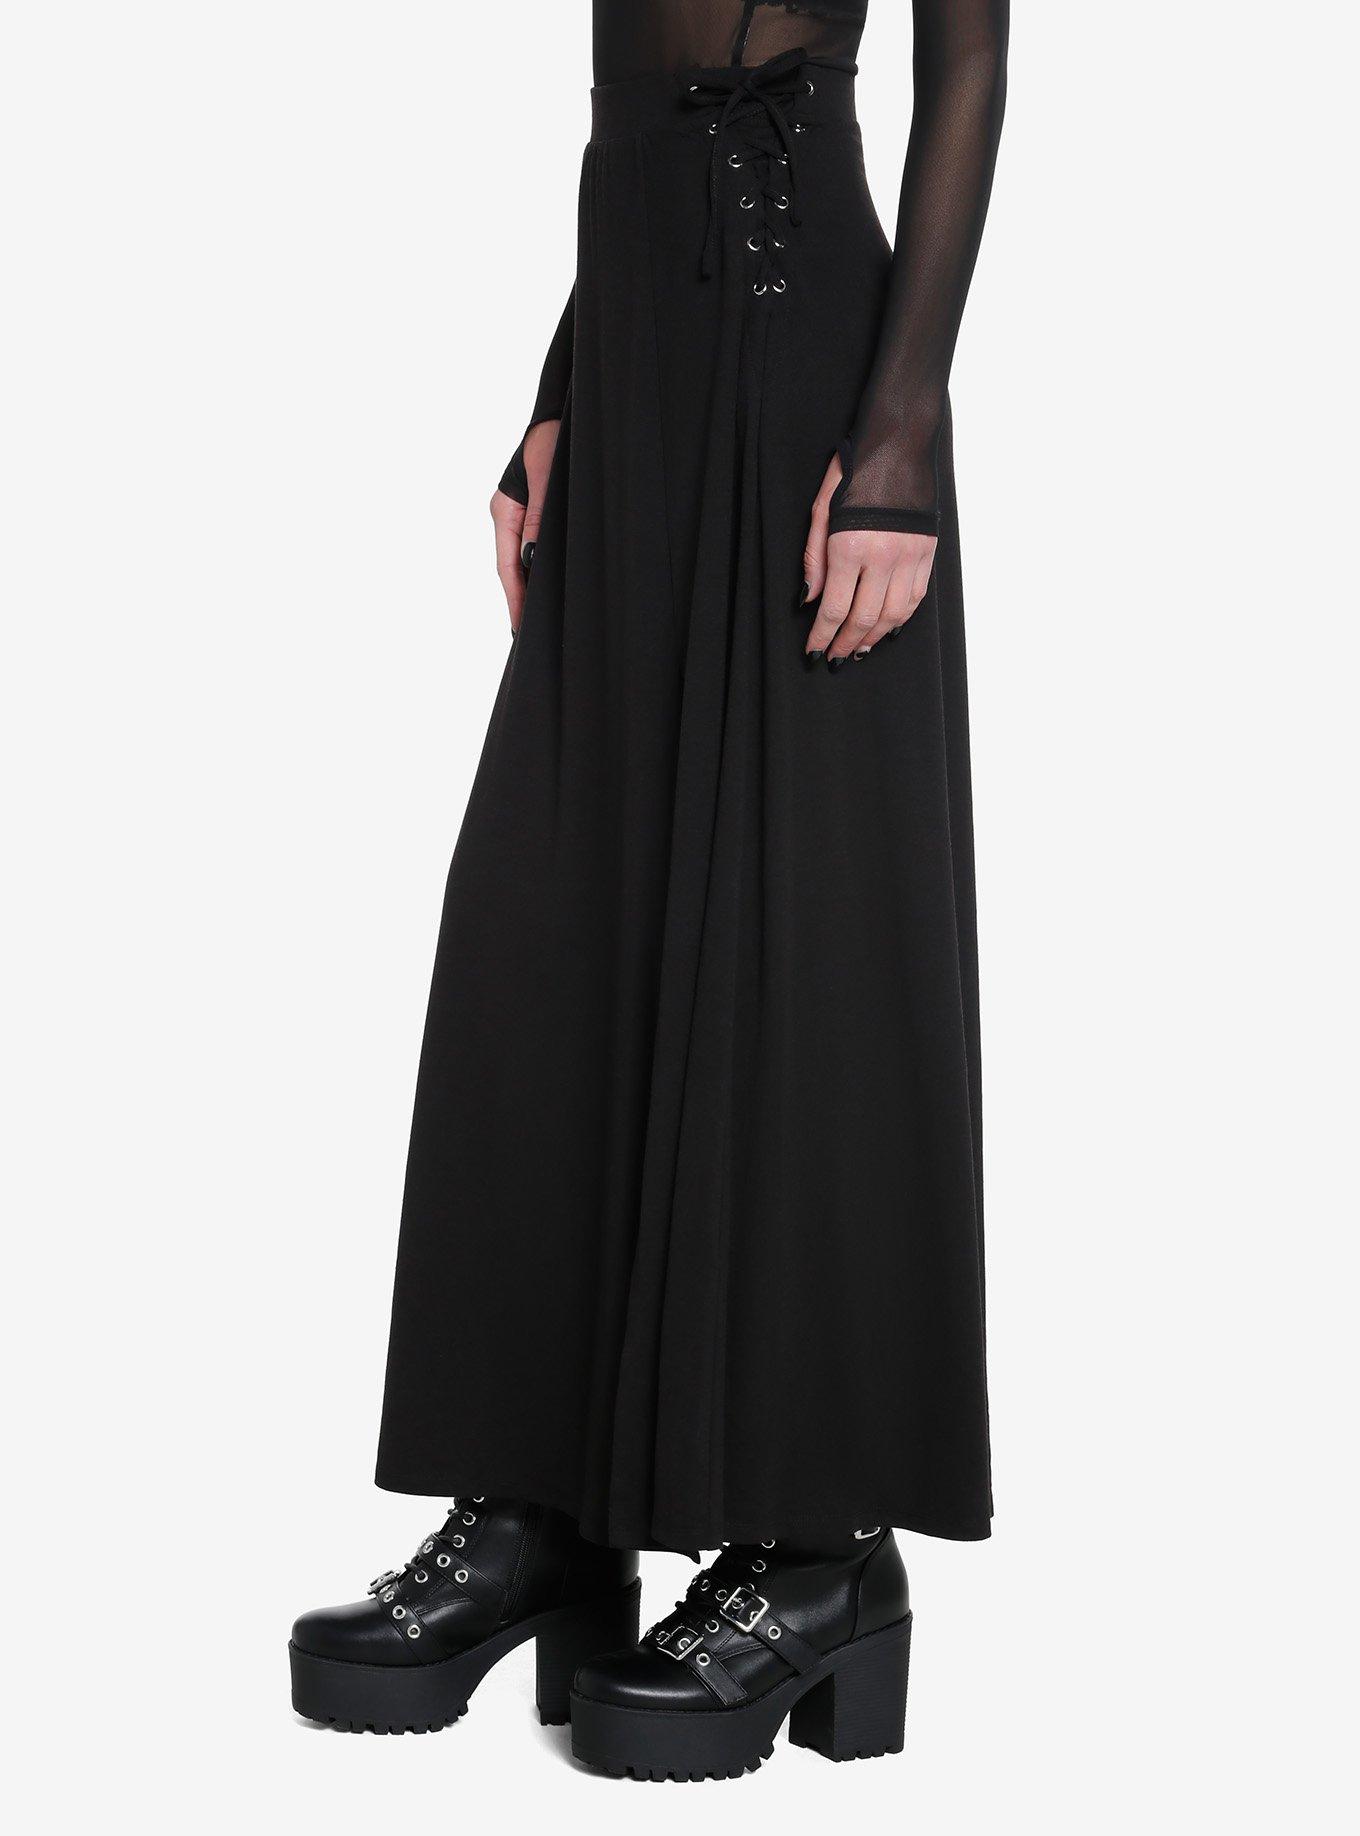 Social Collision Lace-Up Slit Maxi Skirt, BLACK, alternate